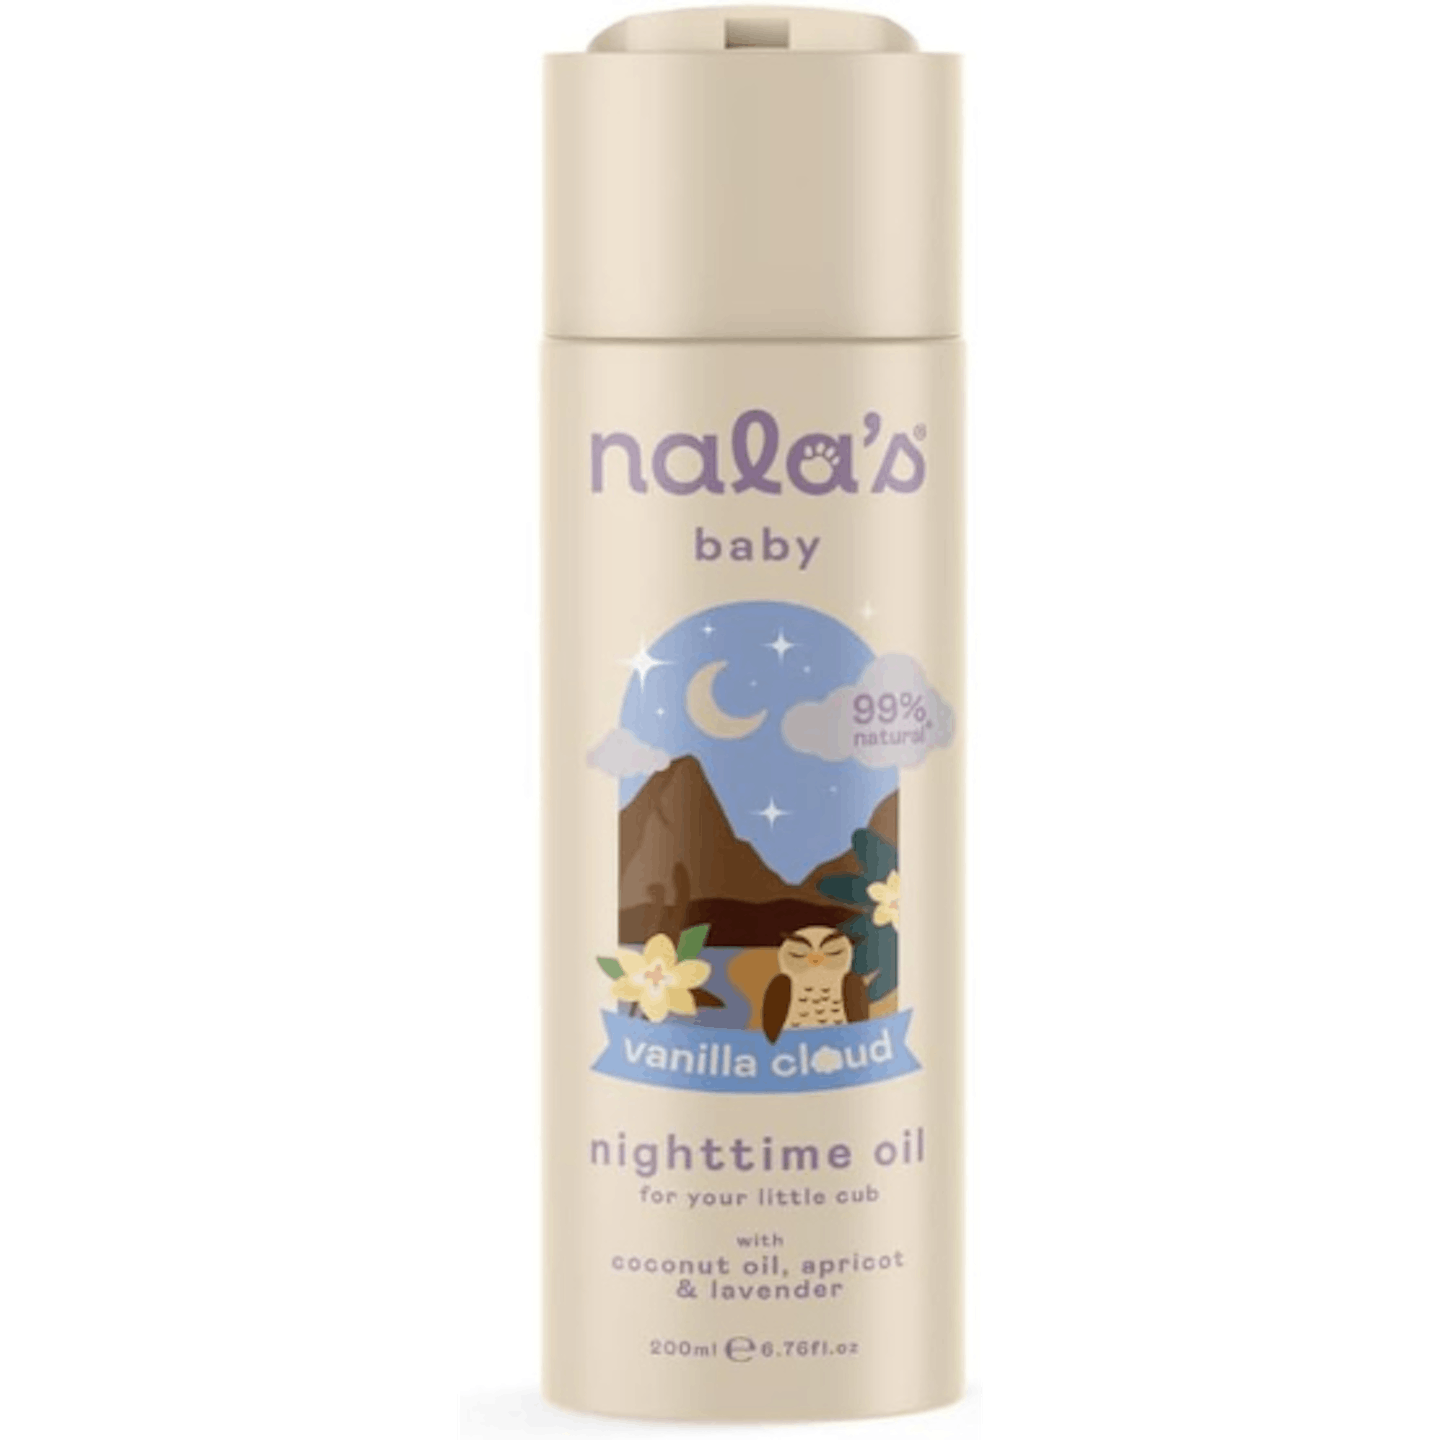 Nala's Baby nighttime oil